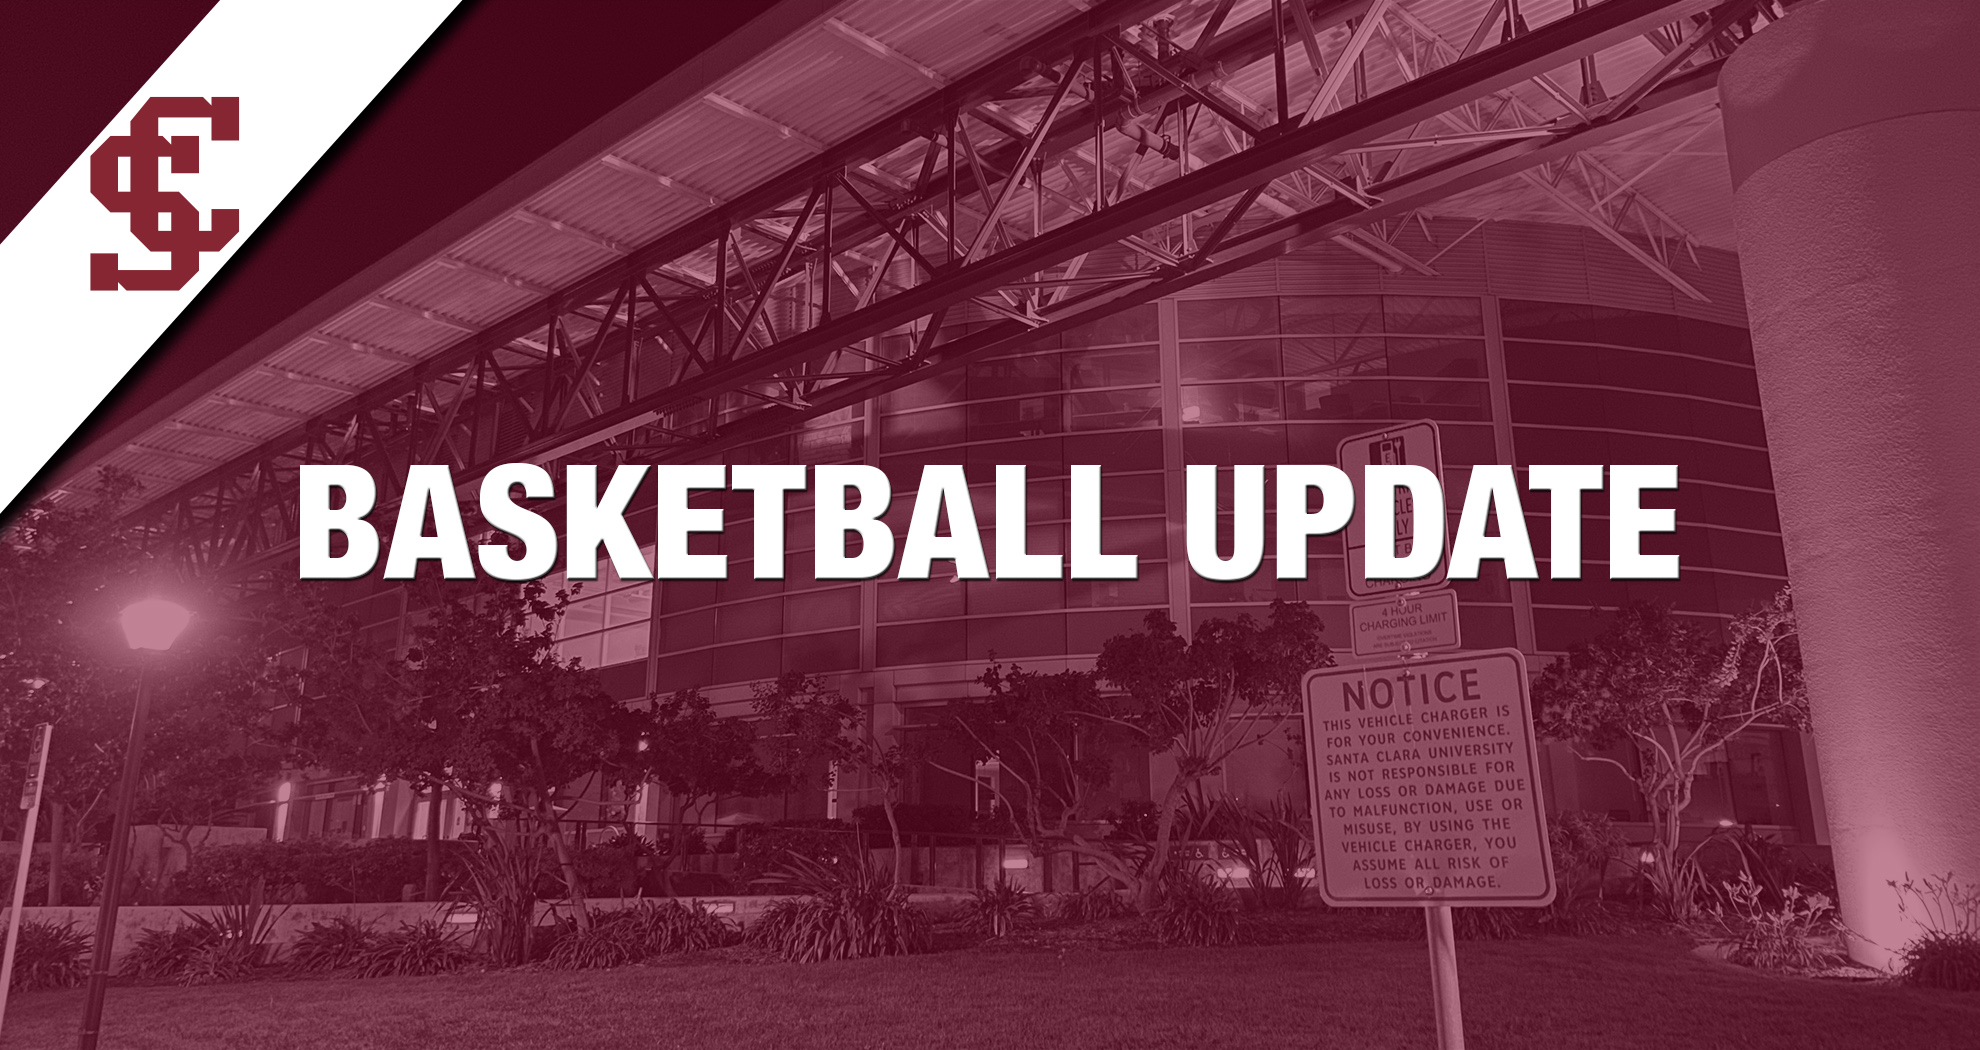 Women's Basketball Game at LMU Postponed